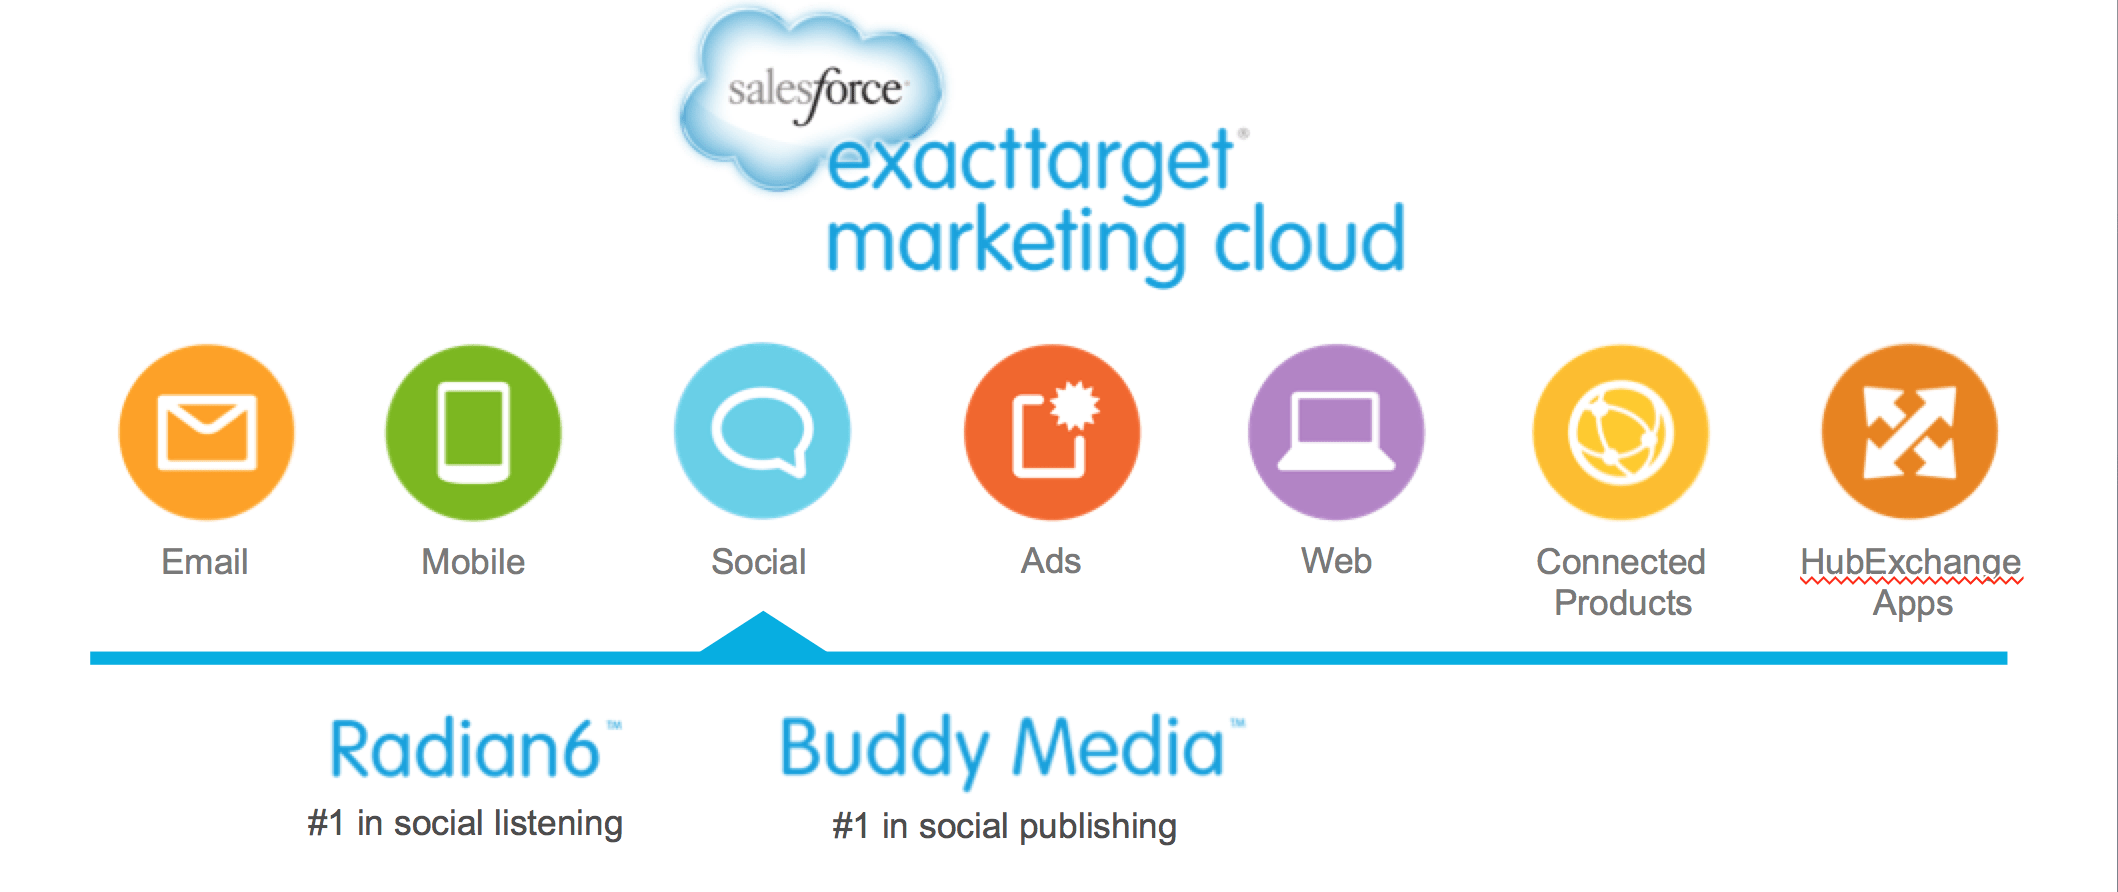 Salesforce Marketing Cloud Logo - Salesforce's ExactTarget Marketing Cloud combines Radian6 and Buddy ...